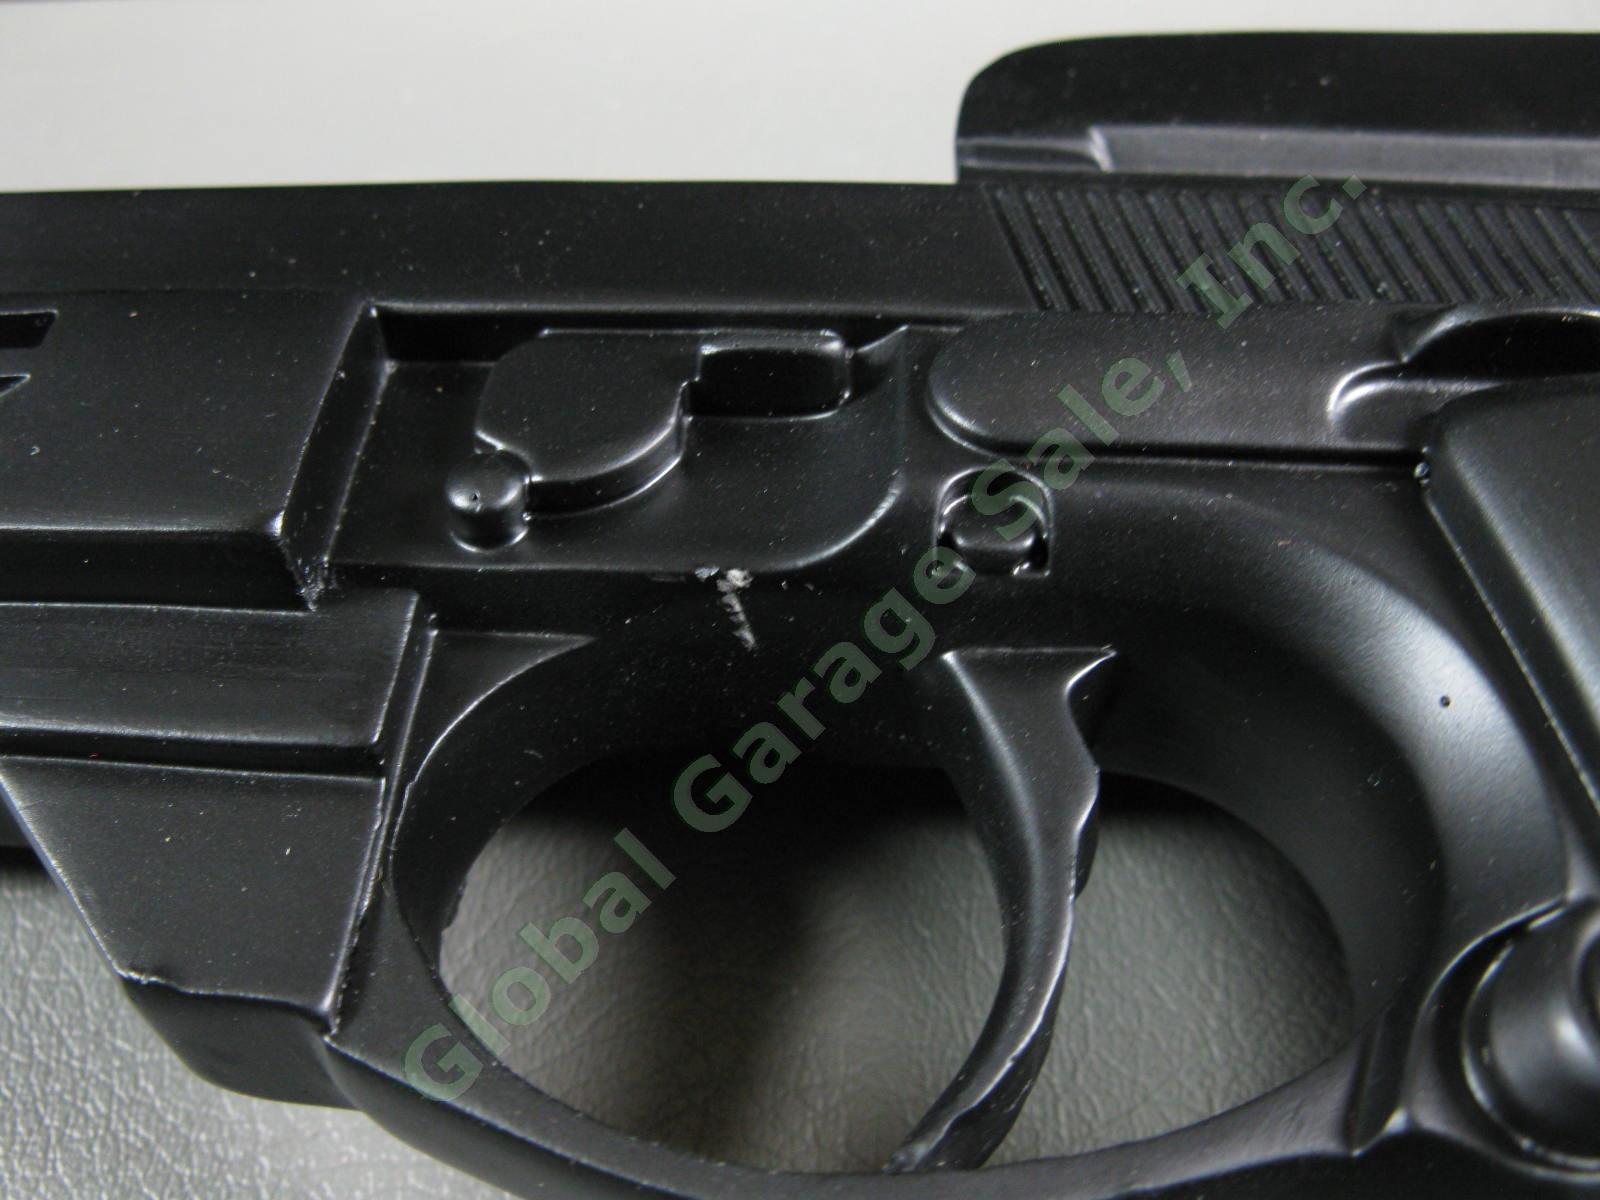 Neca ROBOCOP Beretta M93R Auto-9 Resin Gun Replica Prop Limited Edition 696/1000 8